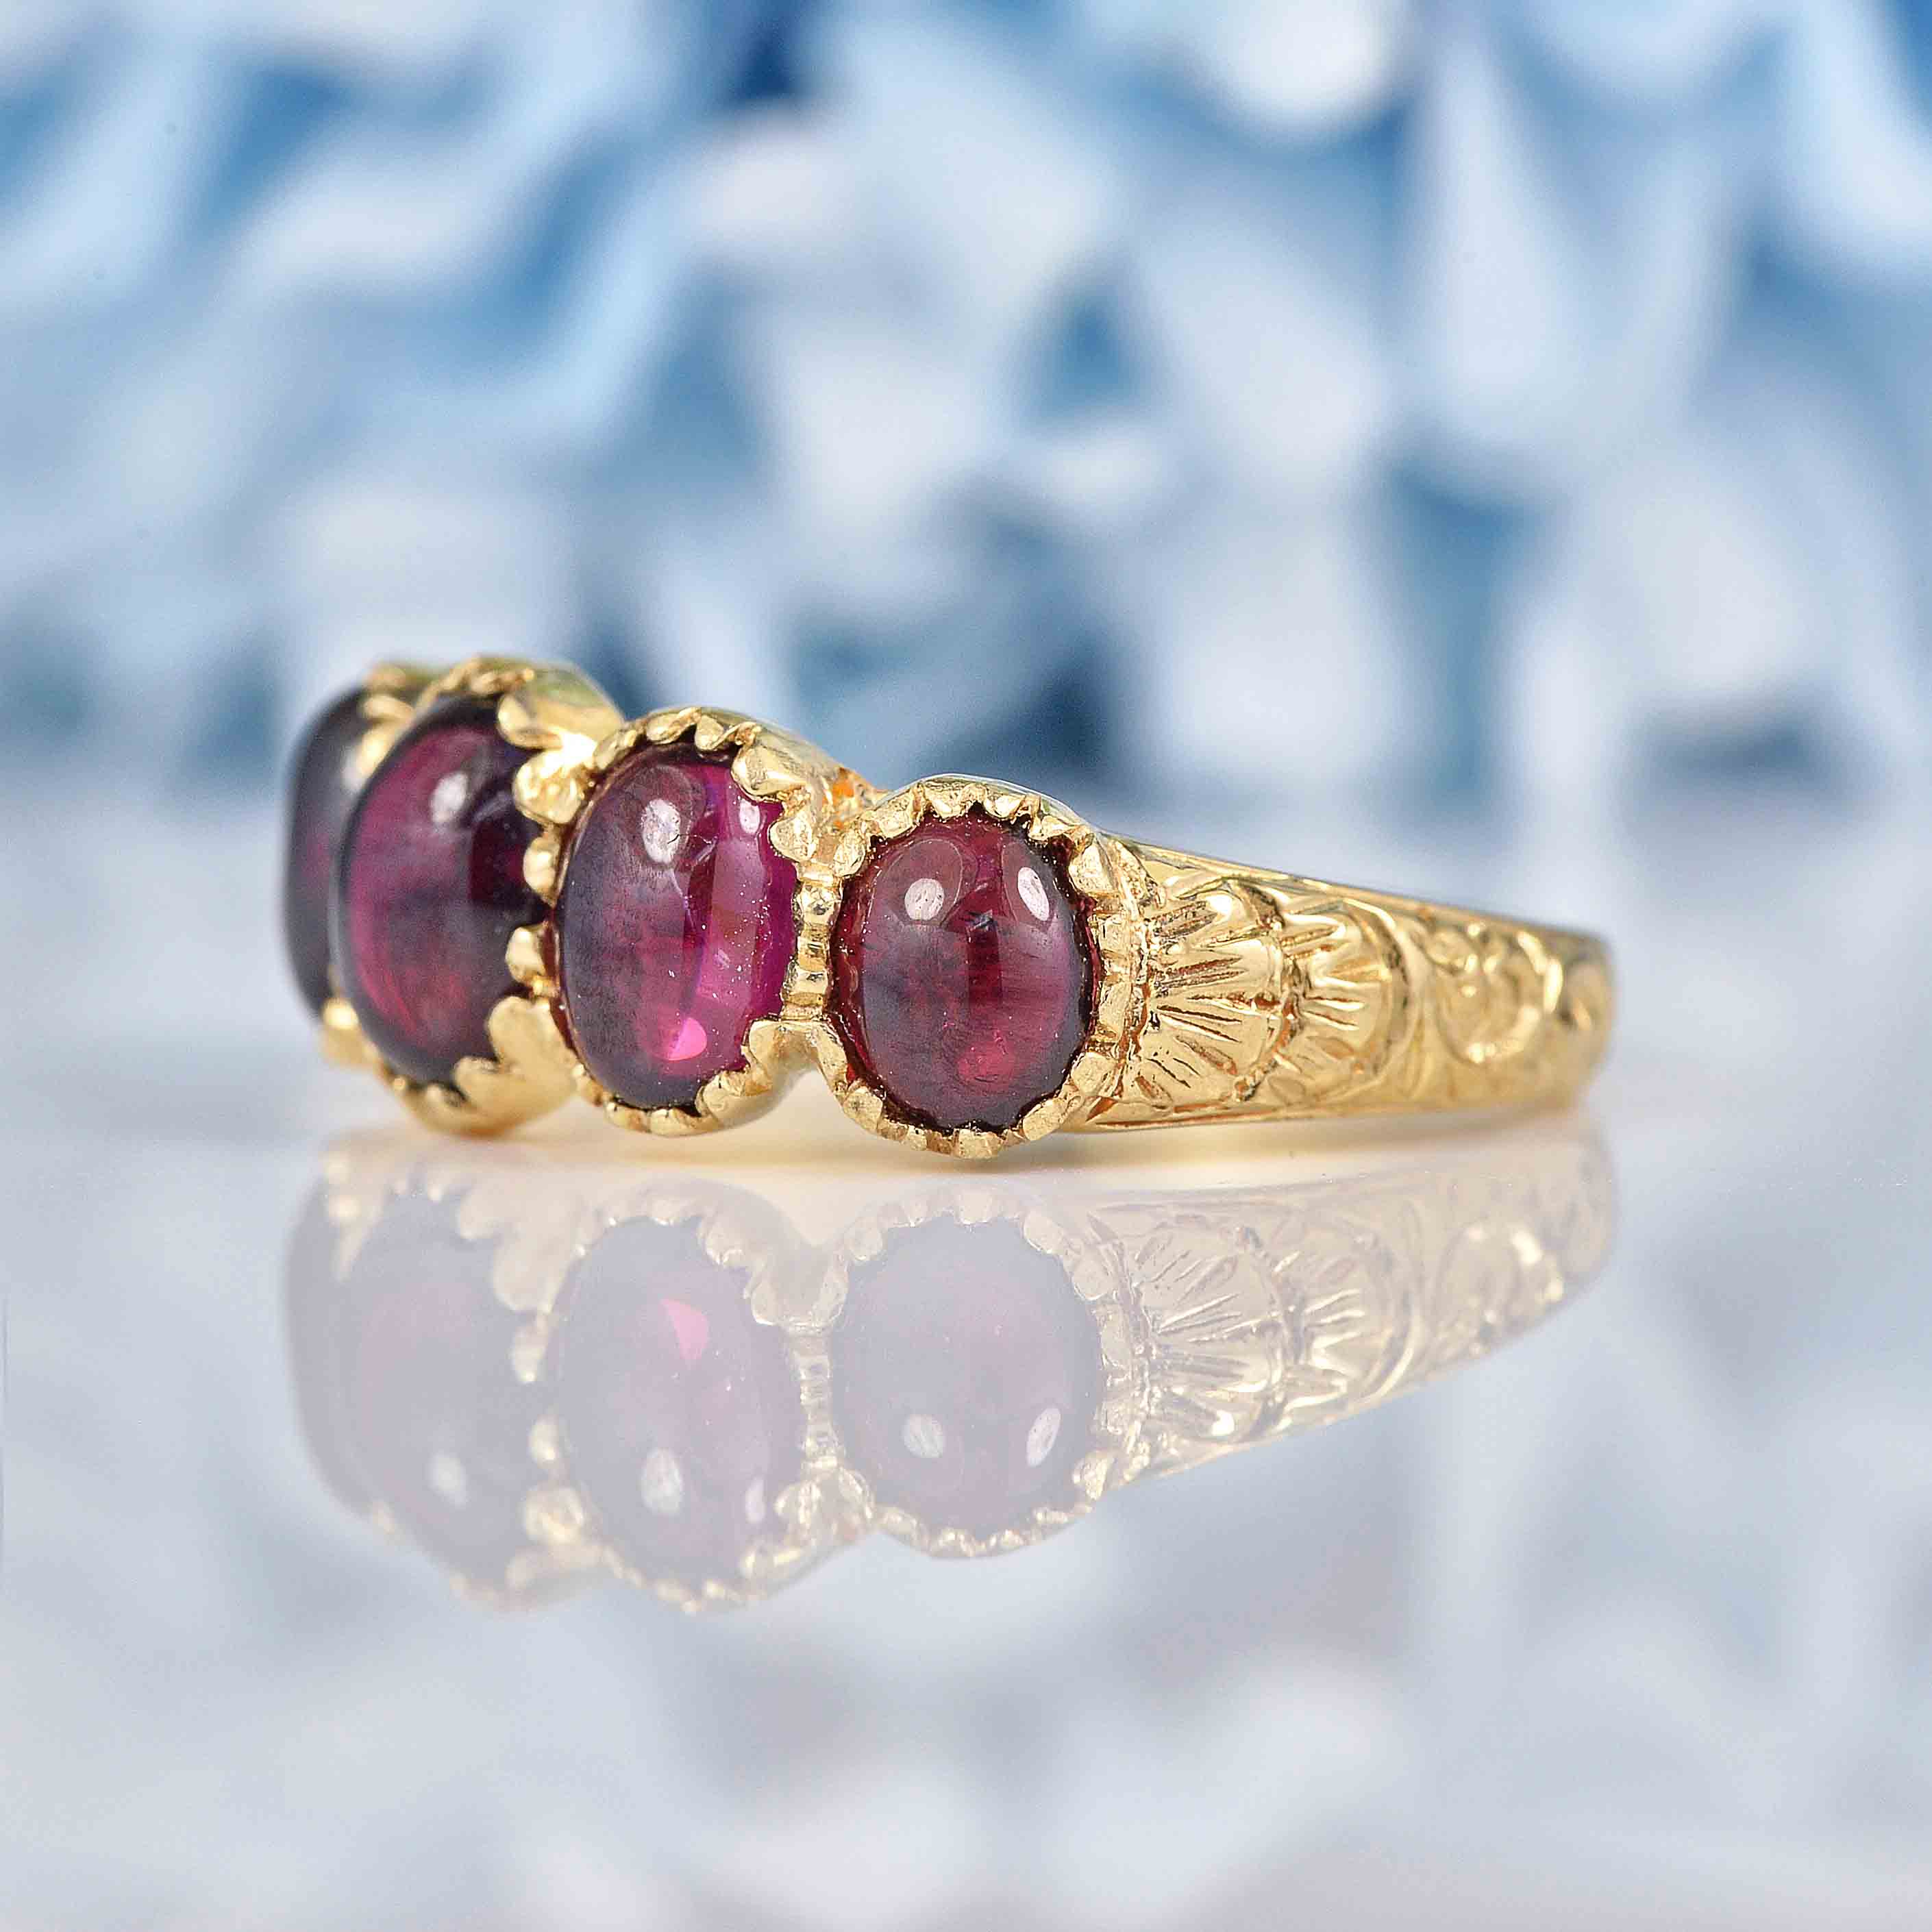 Ellibelle Jewellery Antique Victorian Style Rhodolite Garnet 9ct Gold Five-Stone Ring